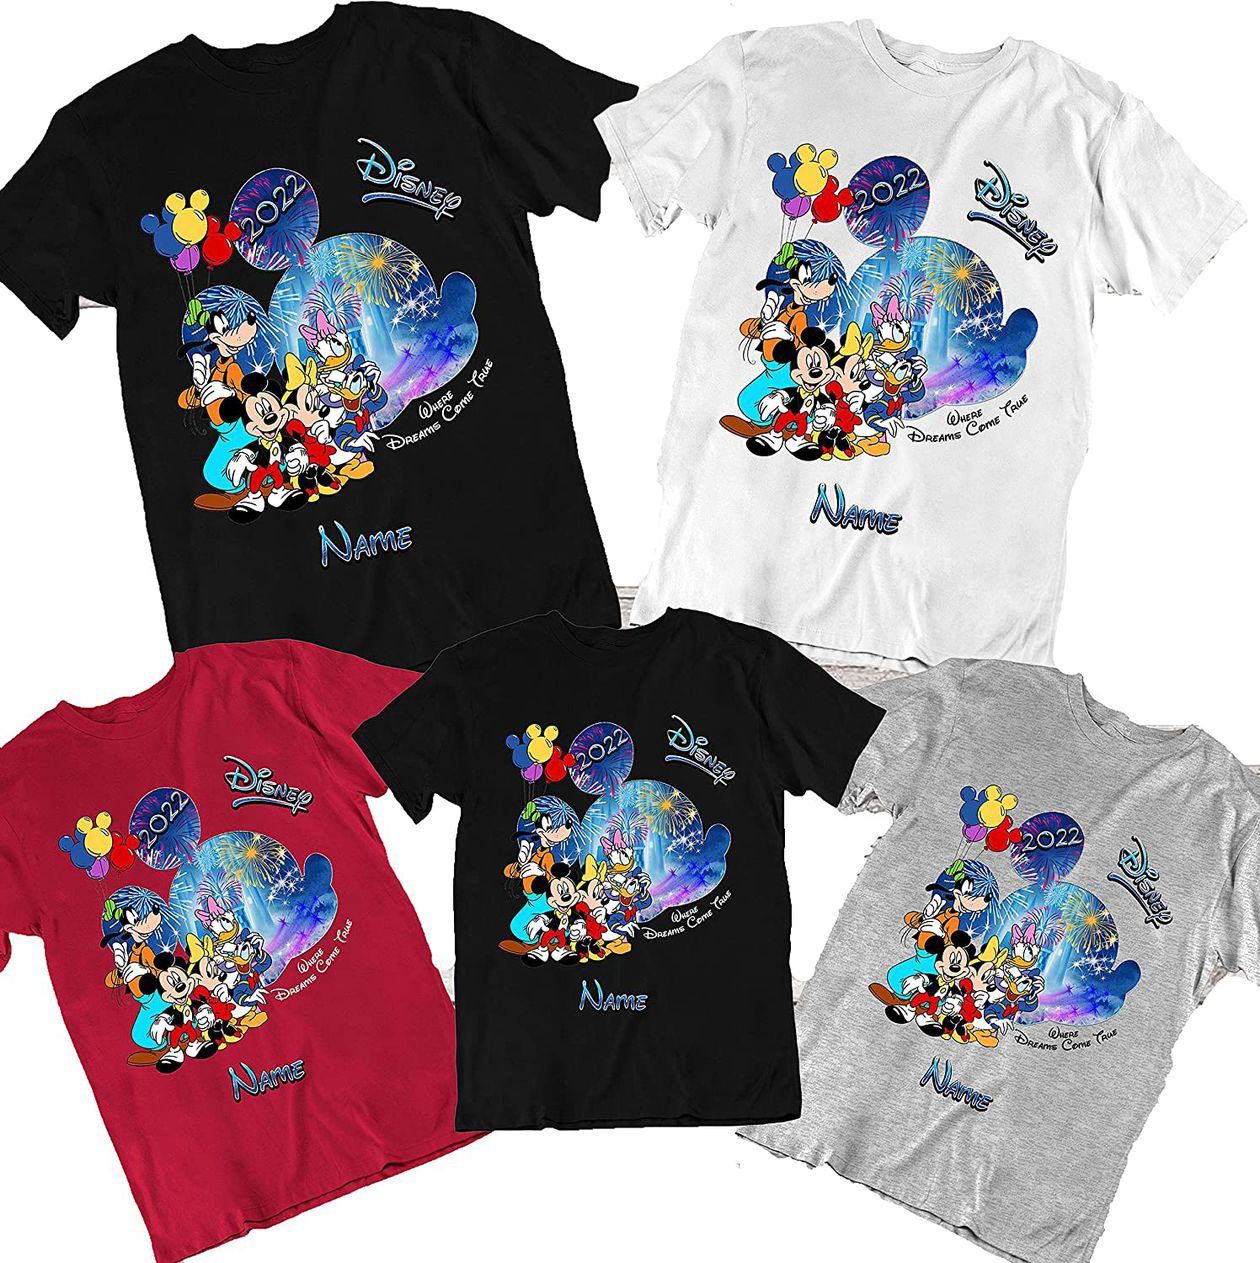 Disney Shirts I Love Pirates Shirt Matching Disney Shirts 